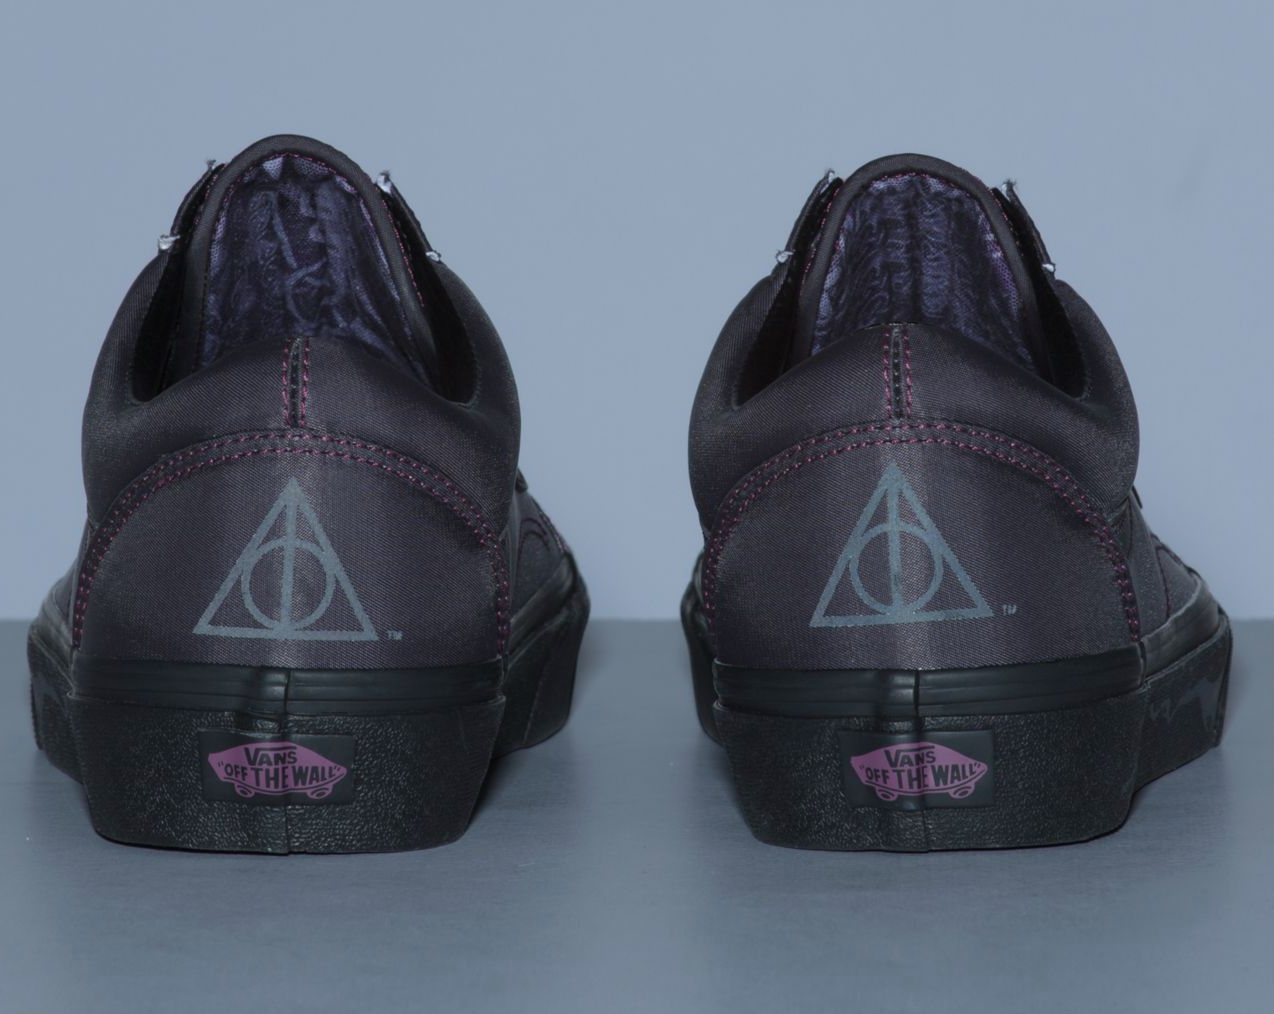 vans hogwarts shoes